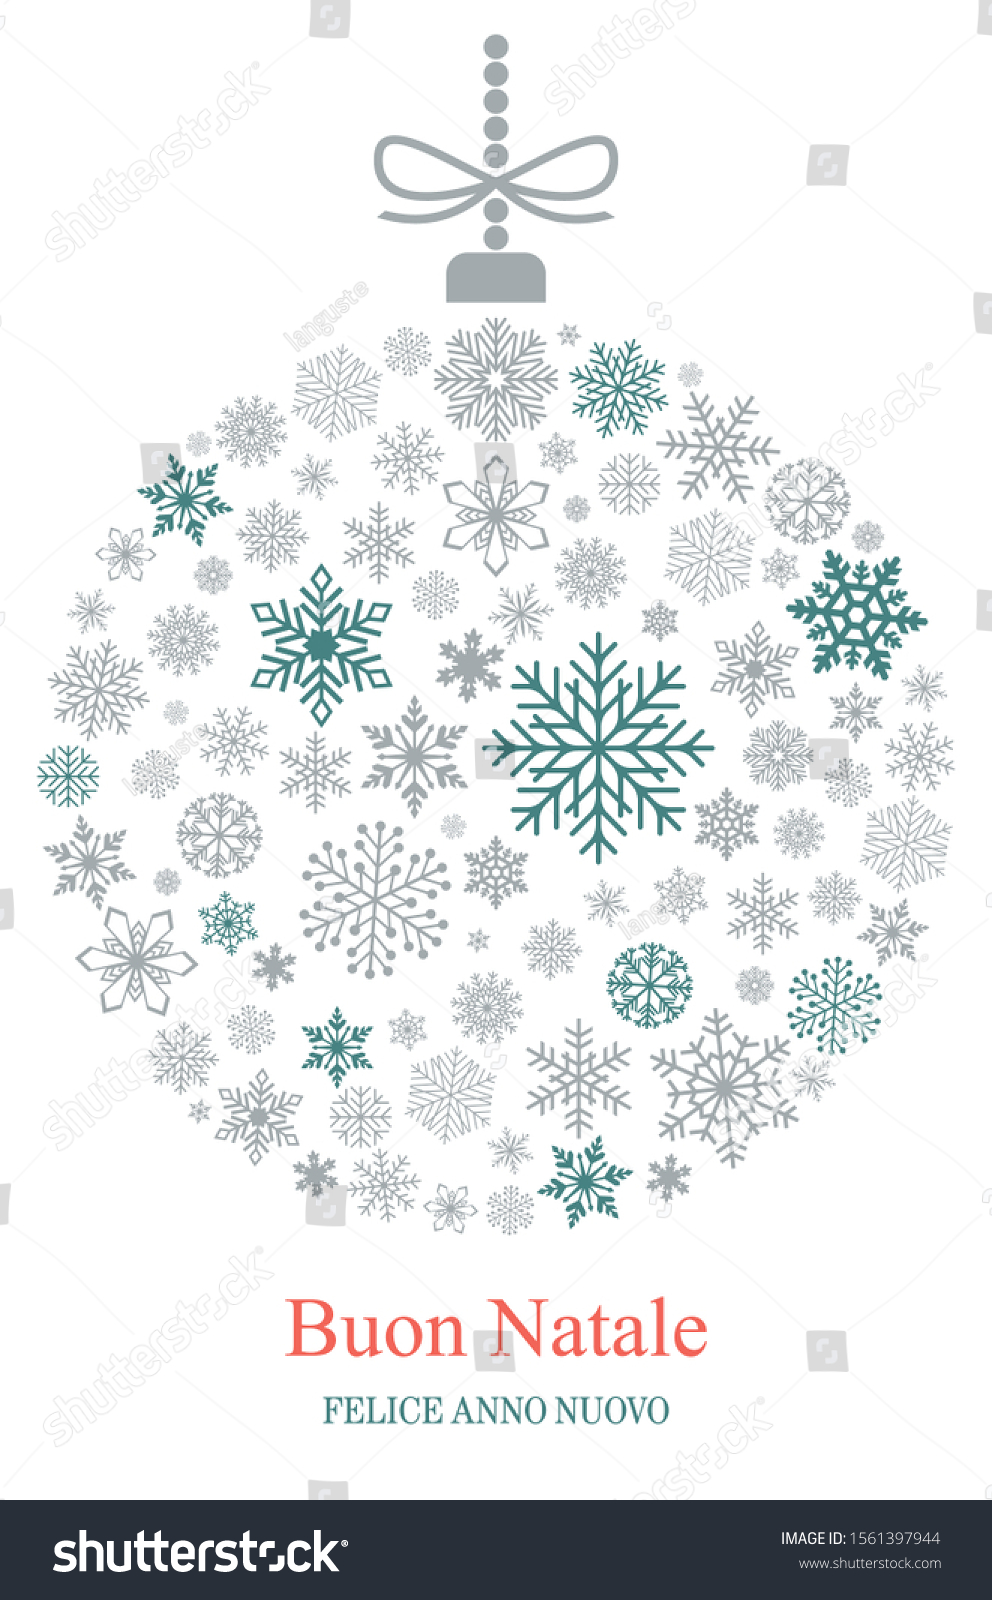 Buon Natale Translation English.Christmas Bauble Vector Snowflakes Italian Christmas Stock Vector Royalty Free 1561397944